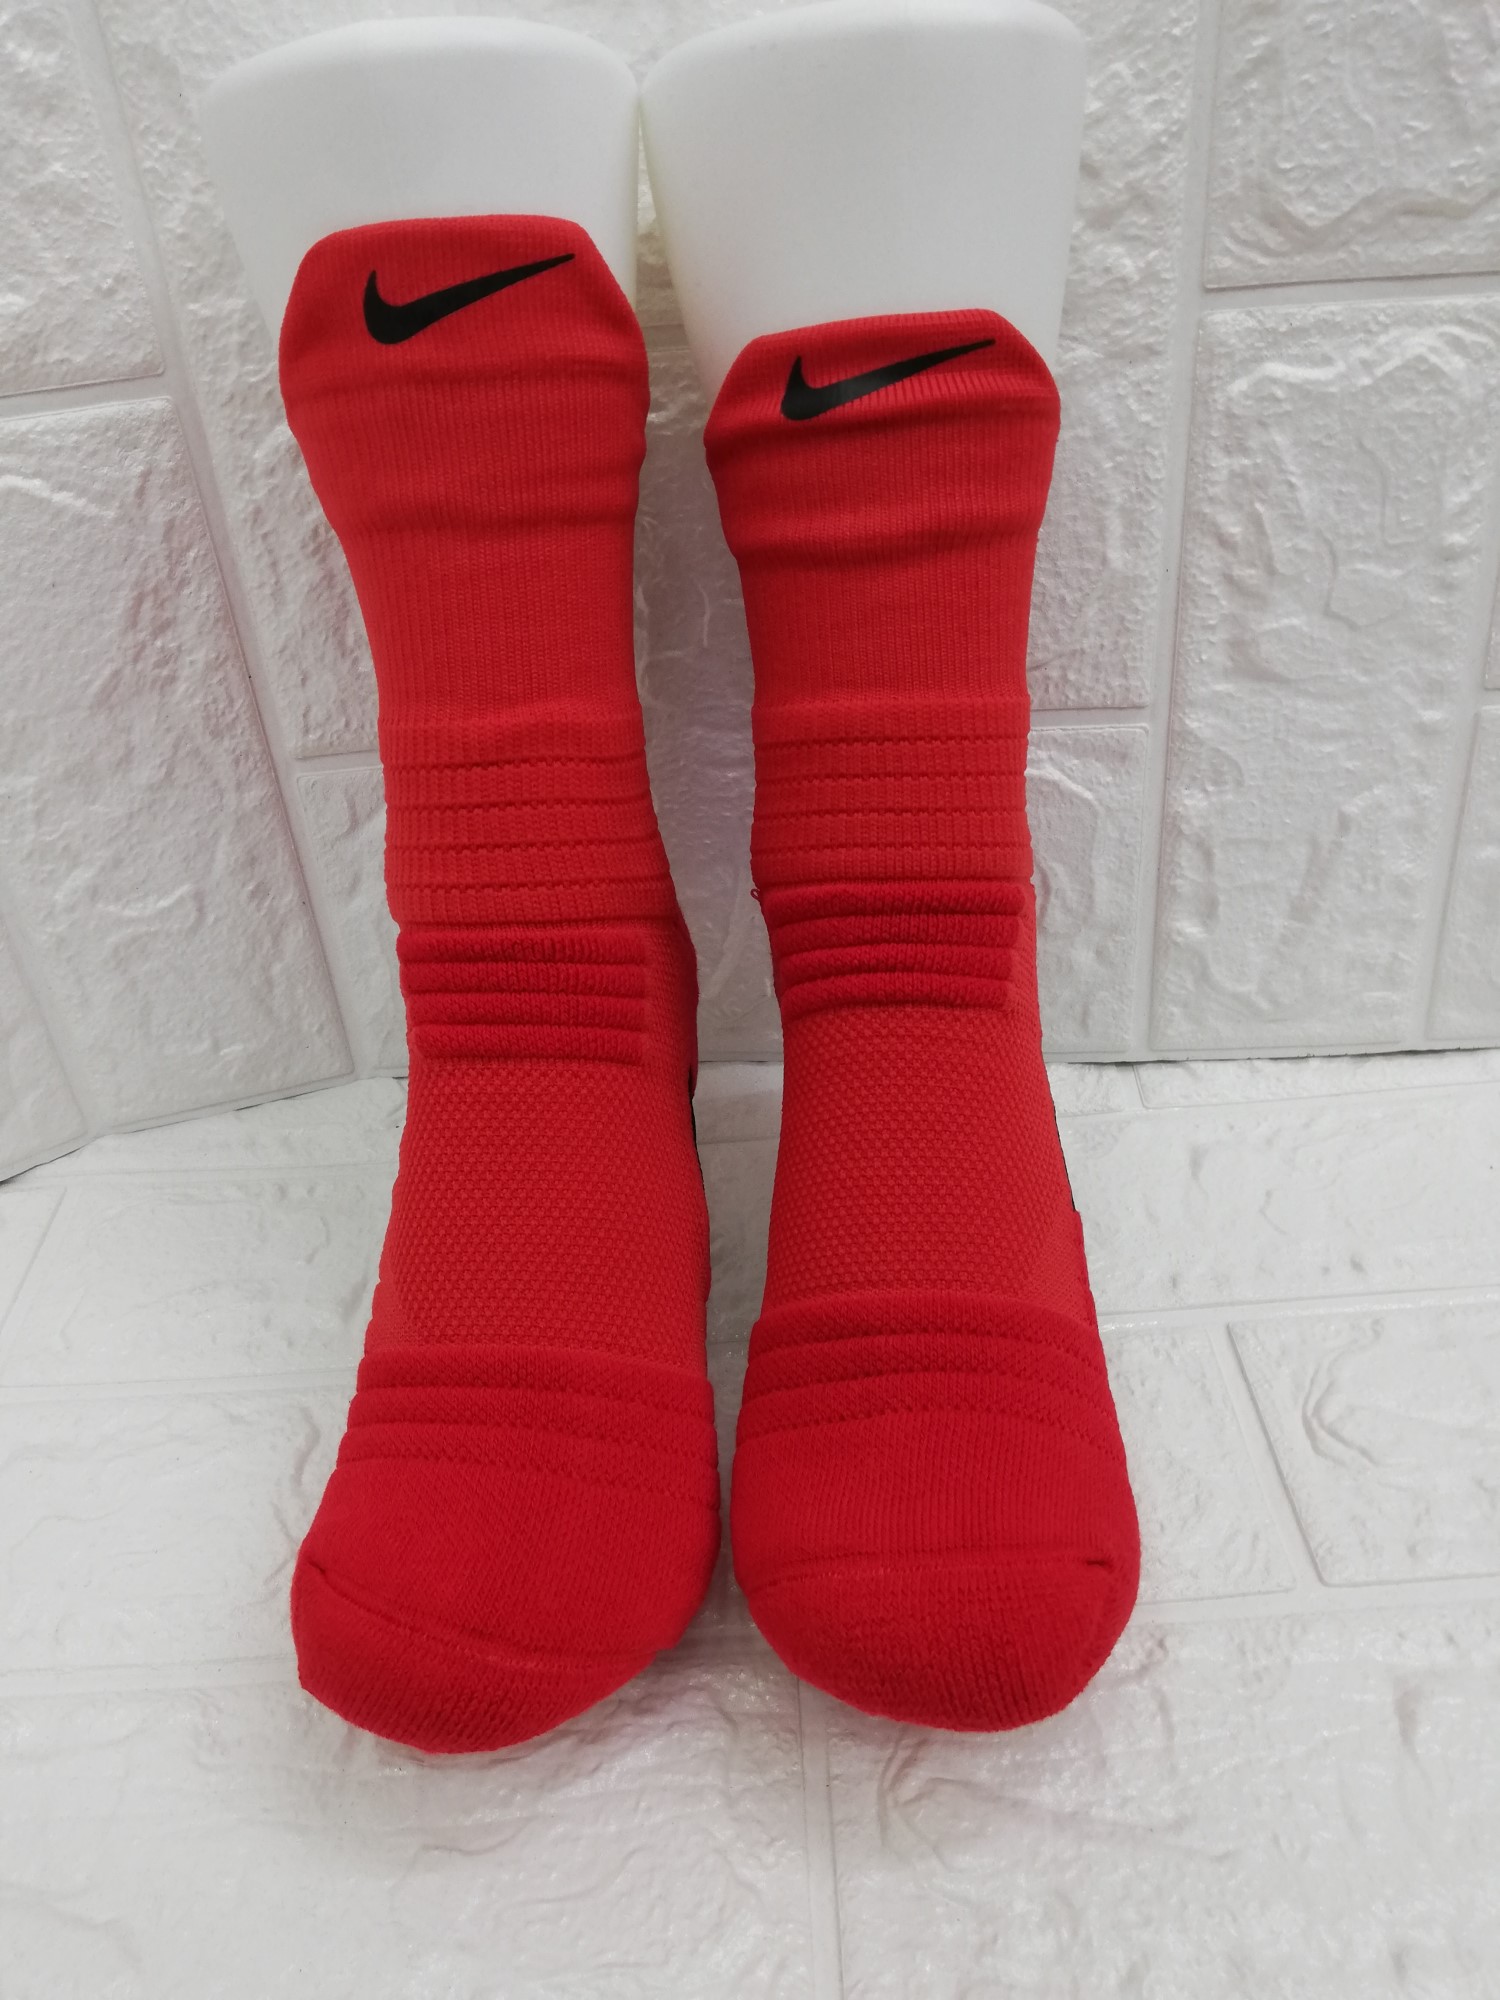 red nba socks